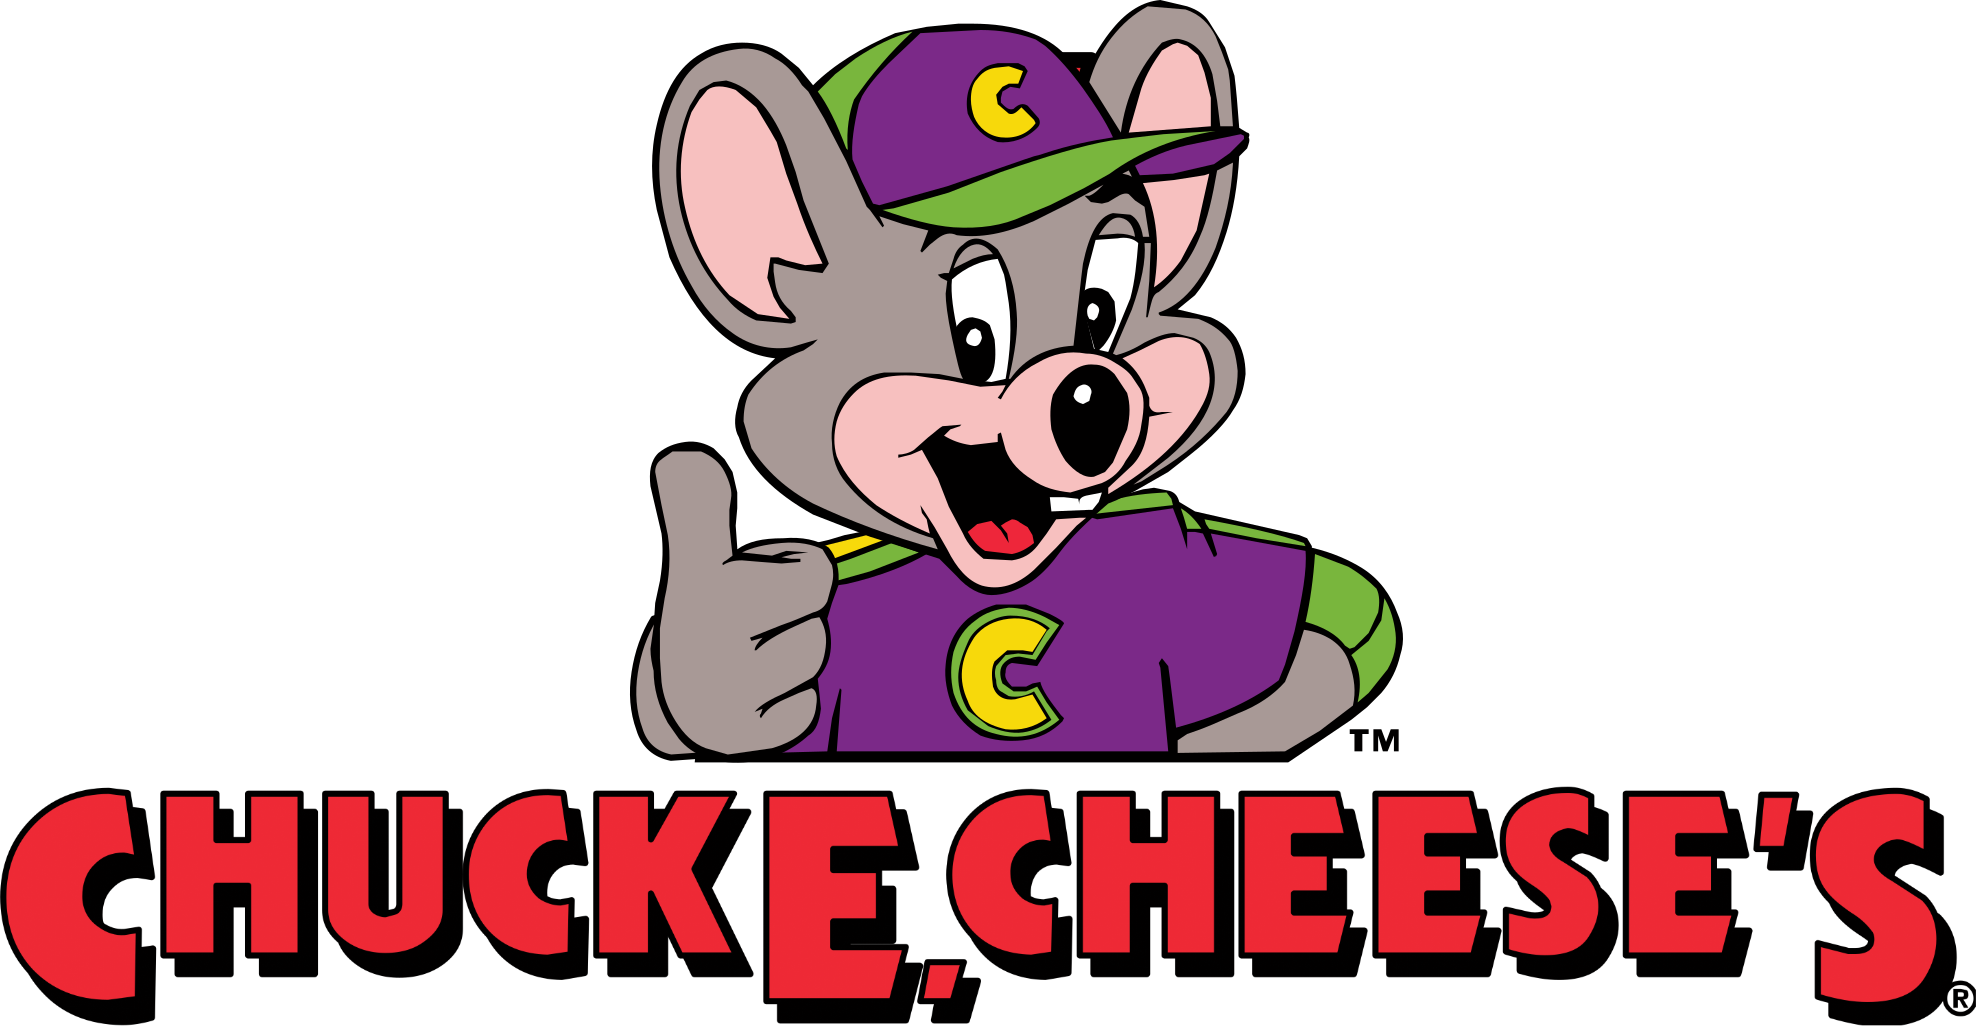 Chuckecheese_logo_2004.png